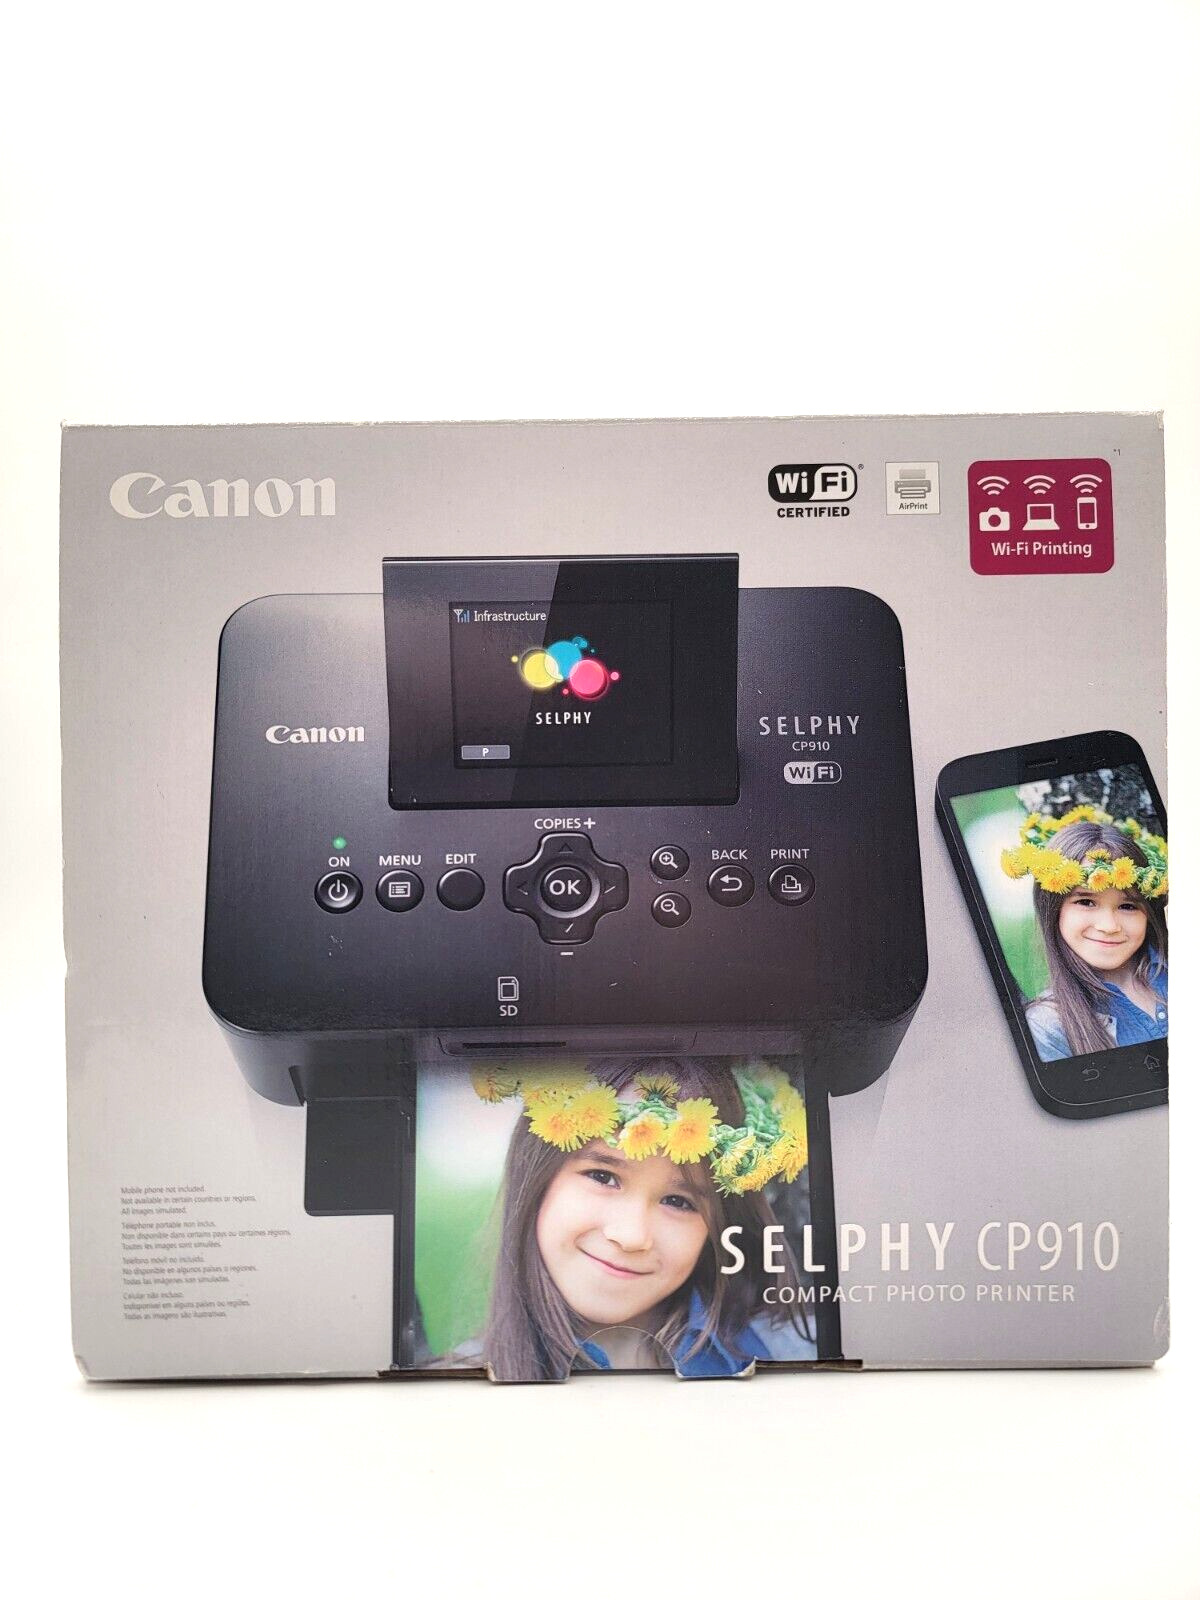 Canon SELPHY CP910 Digital Photo Compact Photo Printer - Black - NEW OPEN BOX